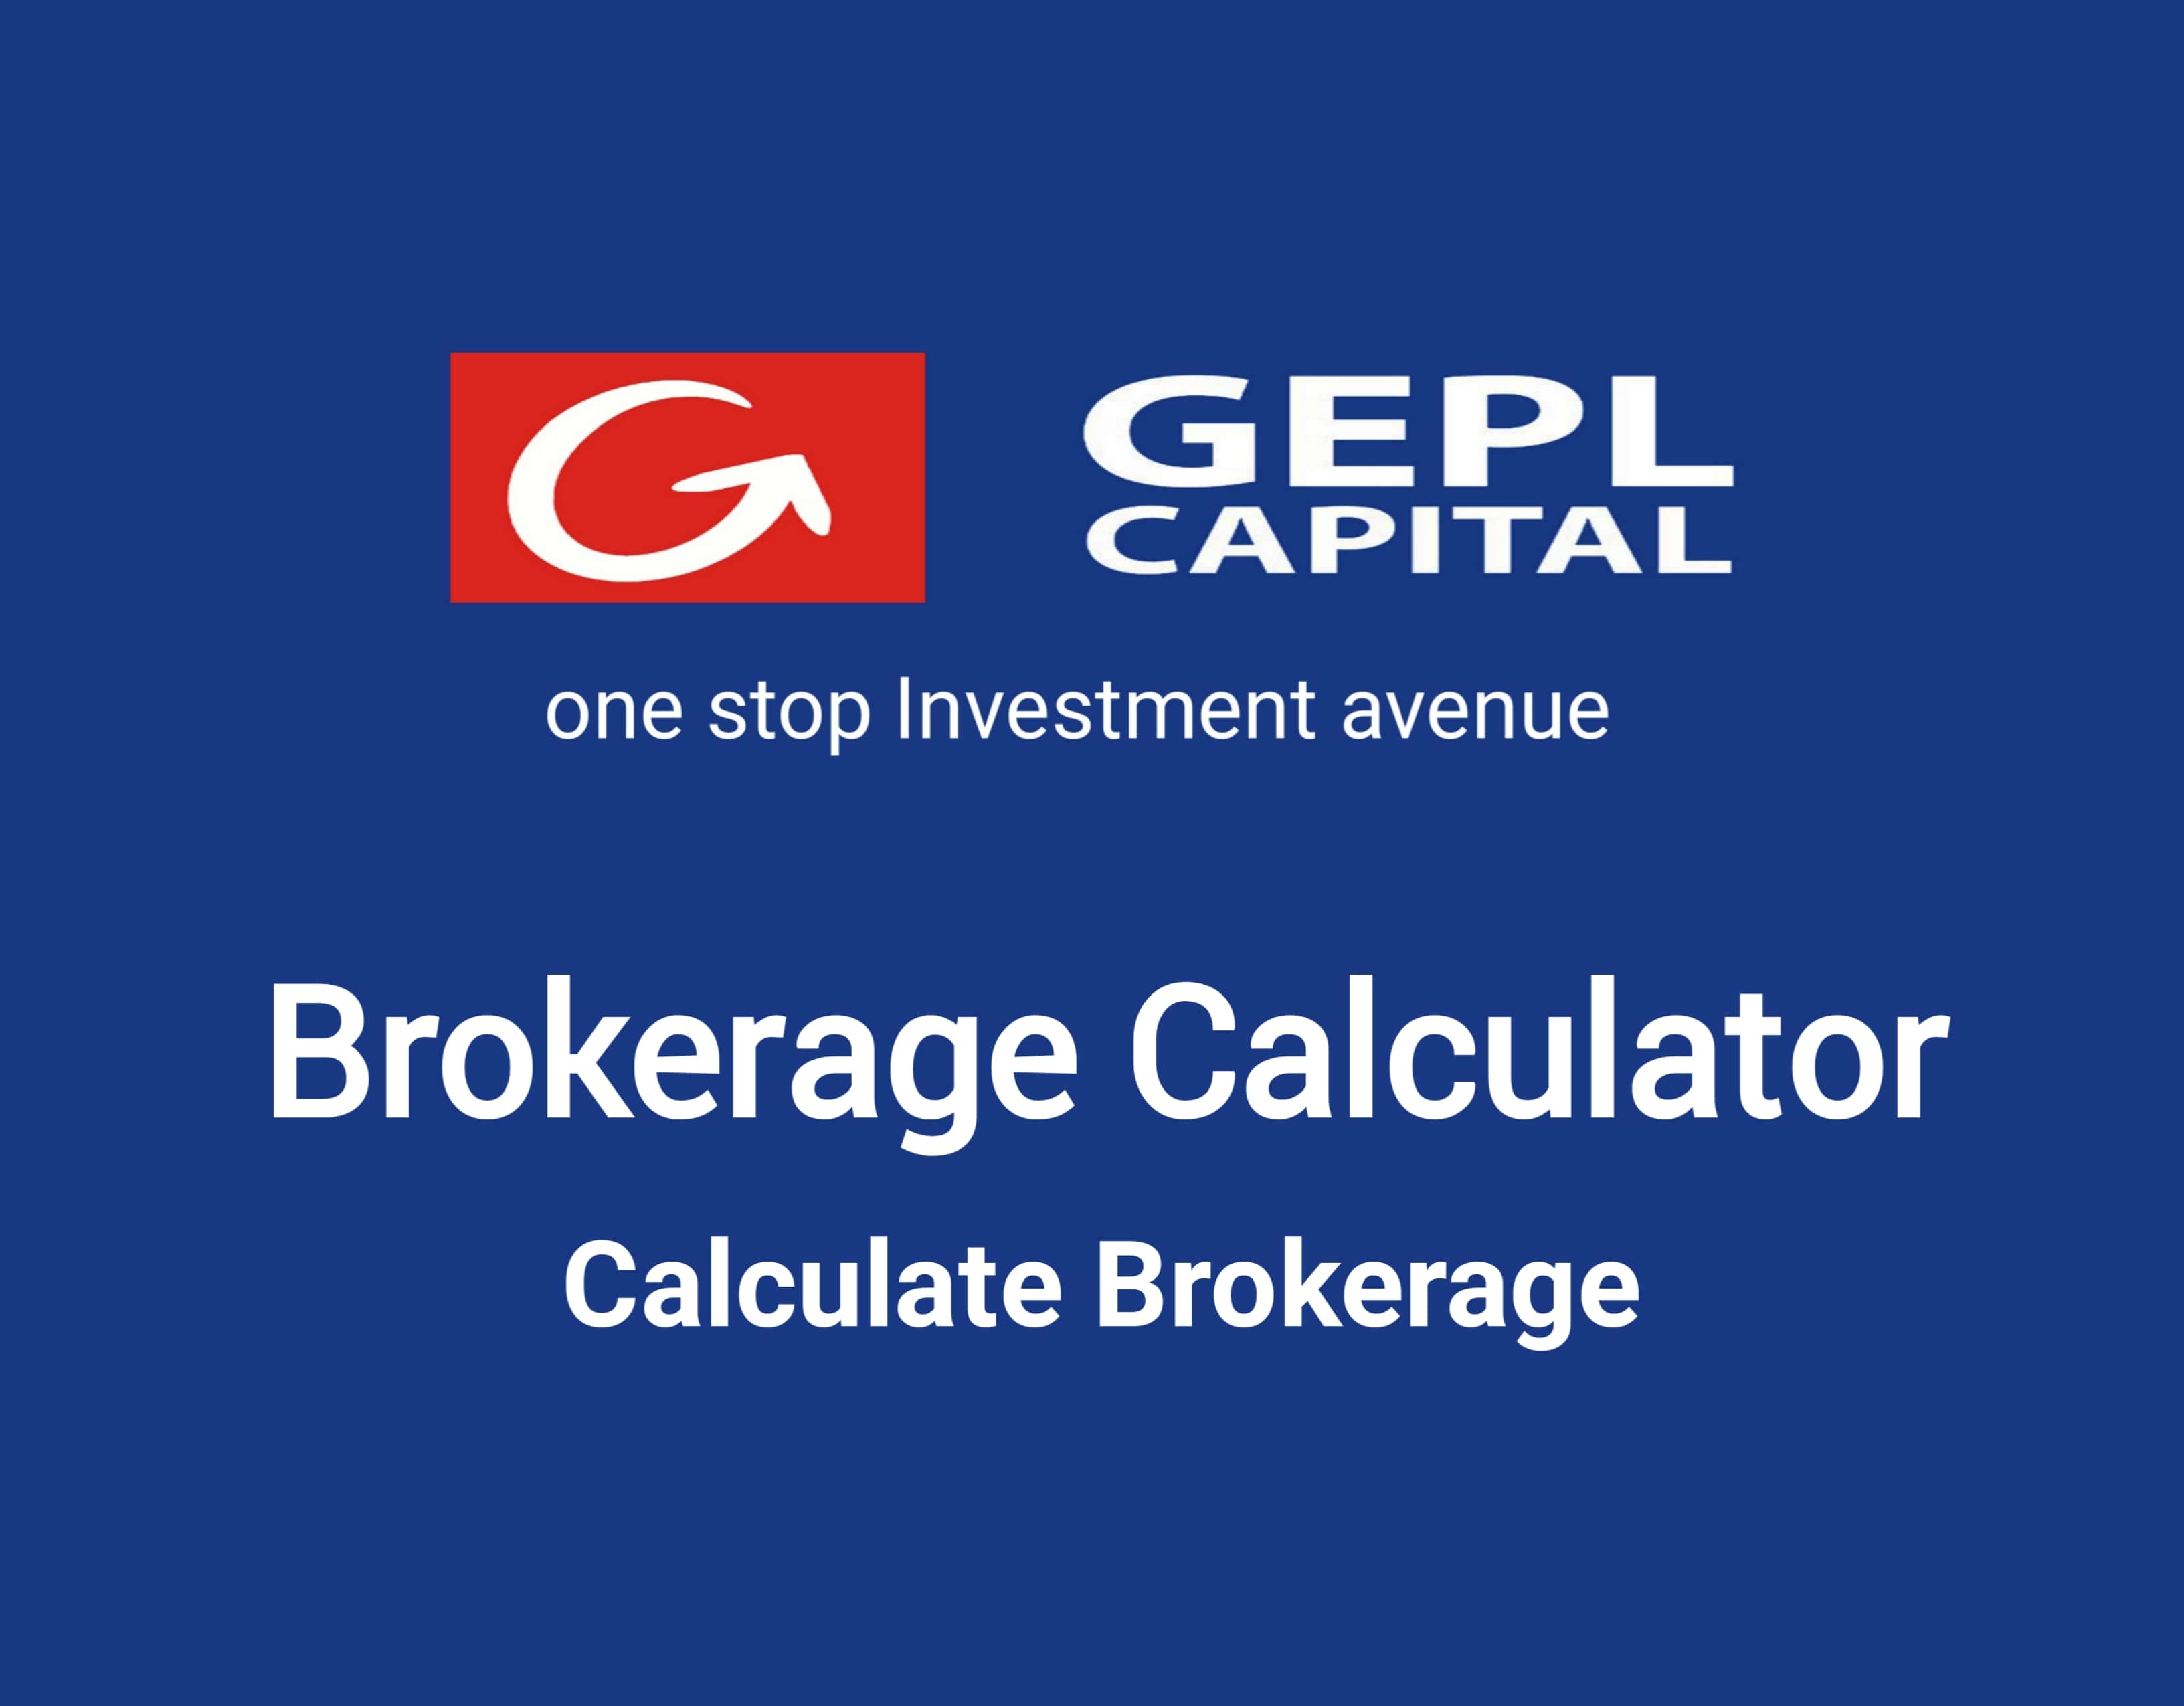 GEPL Brokerage Calculator